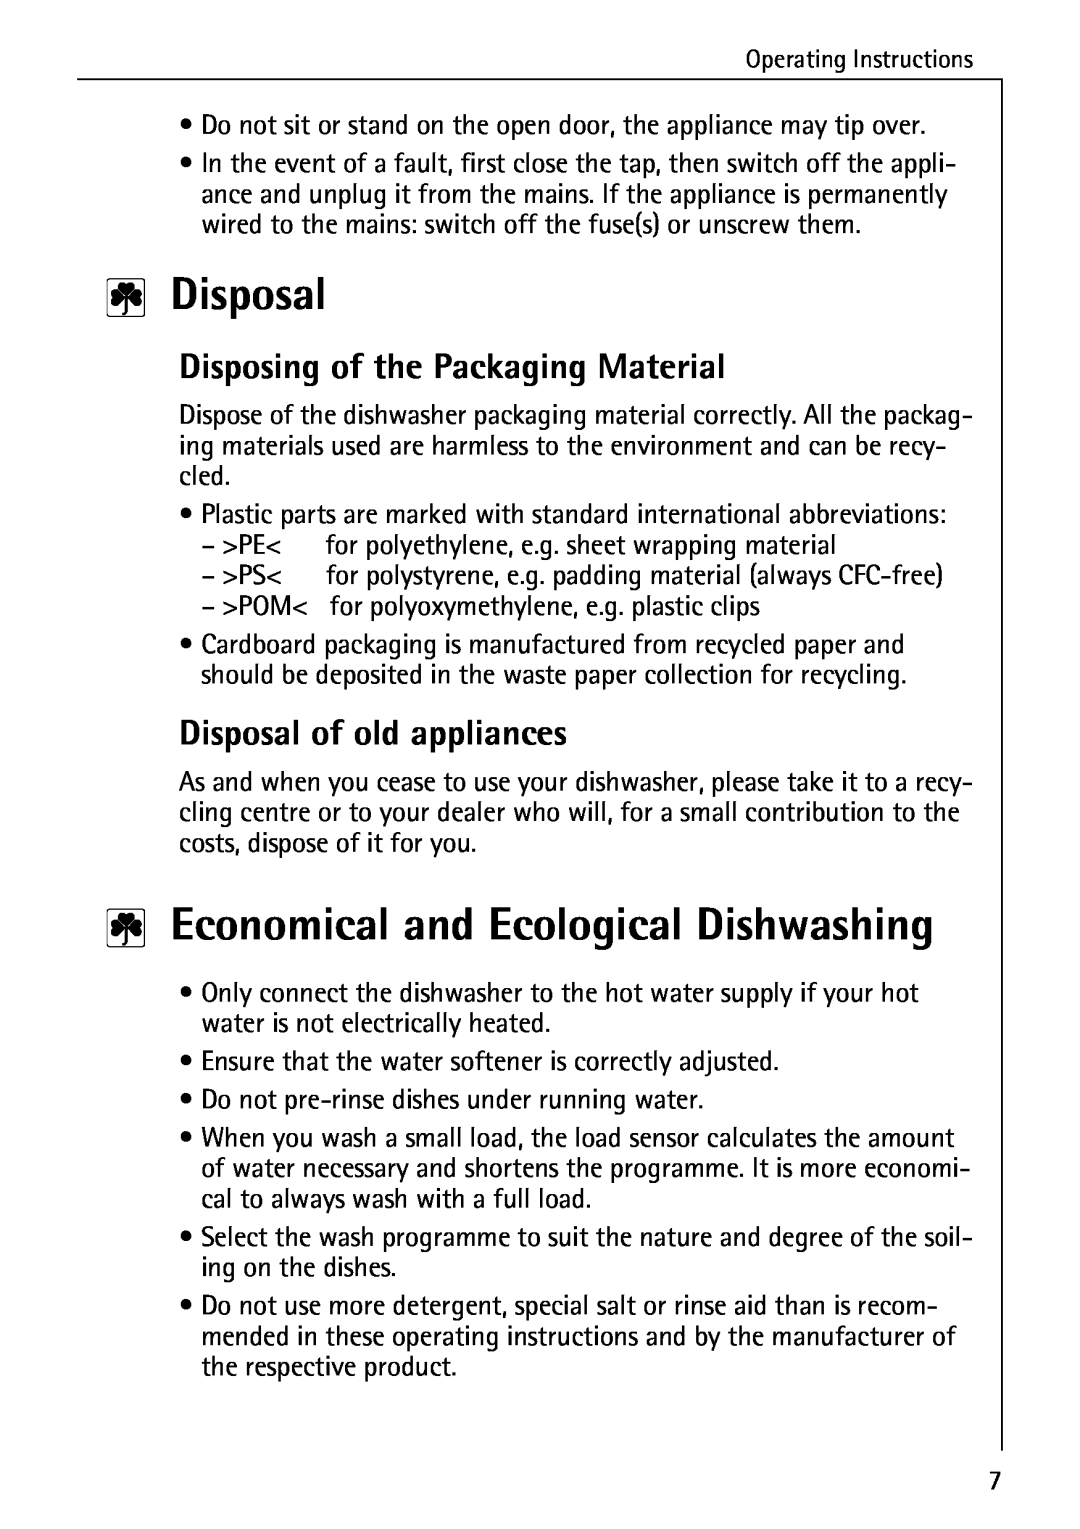 AEG 50800 manual 2Disposal, 2Economical and Ecological Dishwashing, Disposing of the Packaging Material 